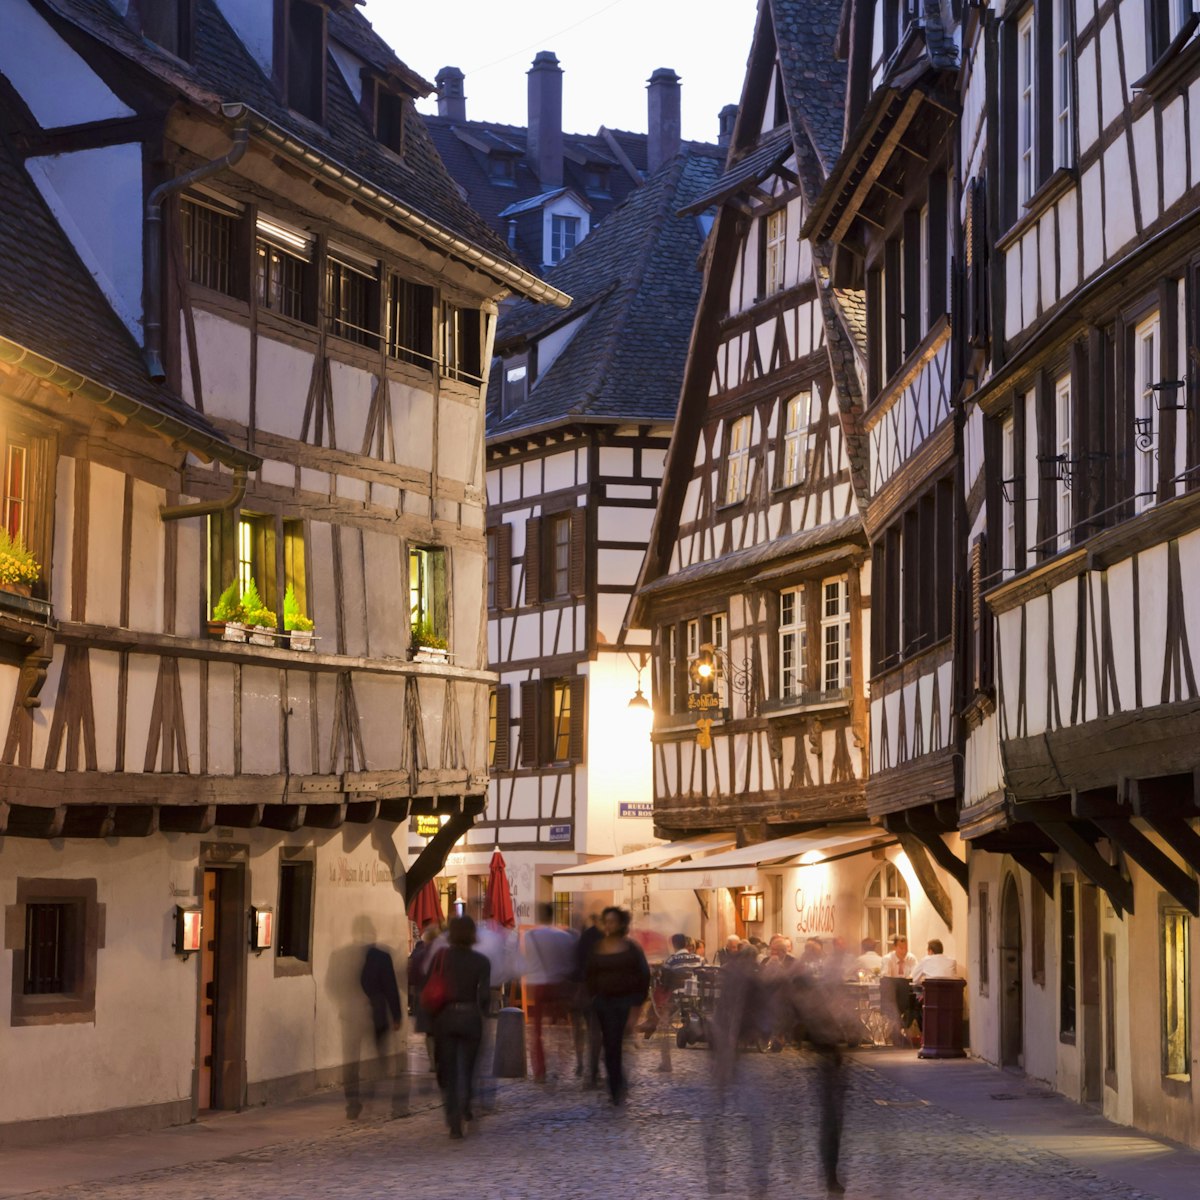 France, Alsace, Strasbourg, Petite-France, View of restaurants, taverns and framed houses